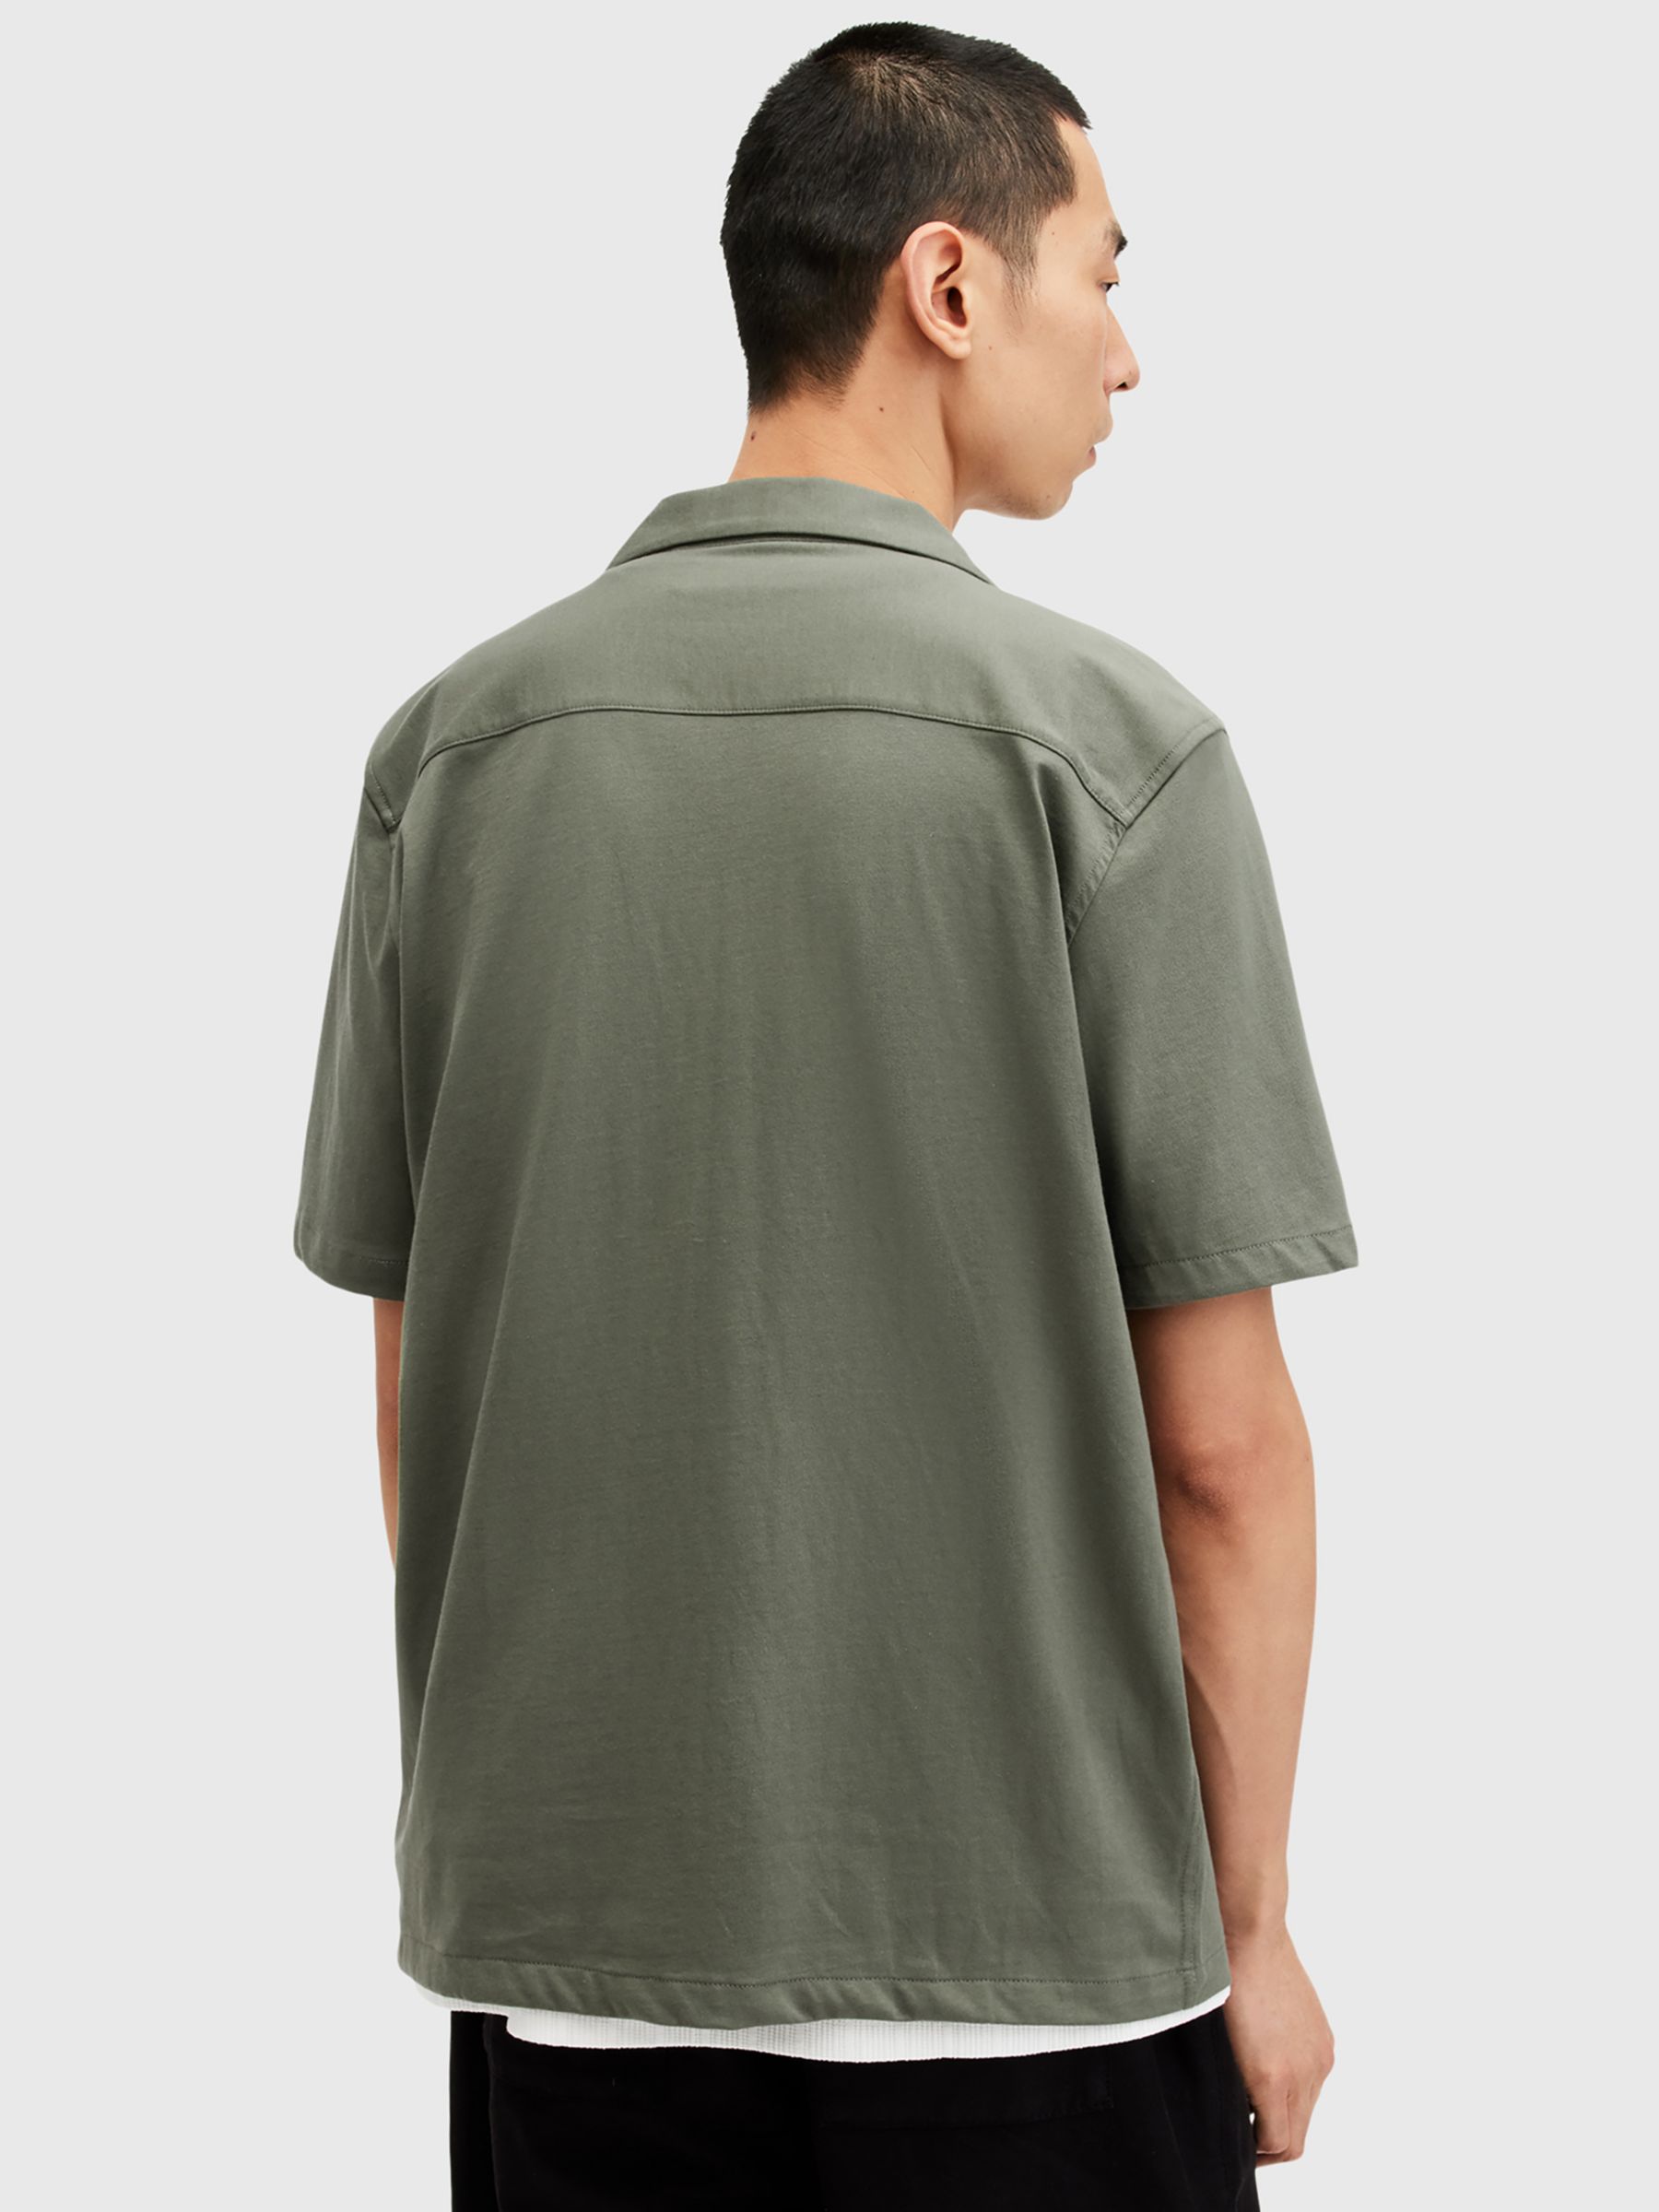 AllSaints Hudson Short Sleeve Shirt, Green, L